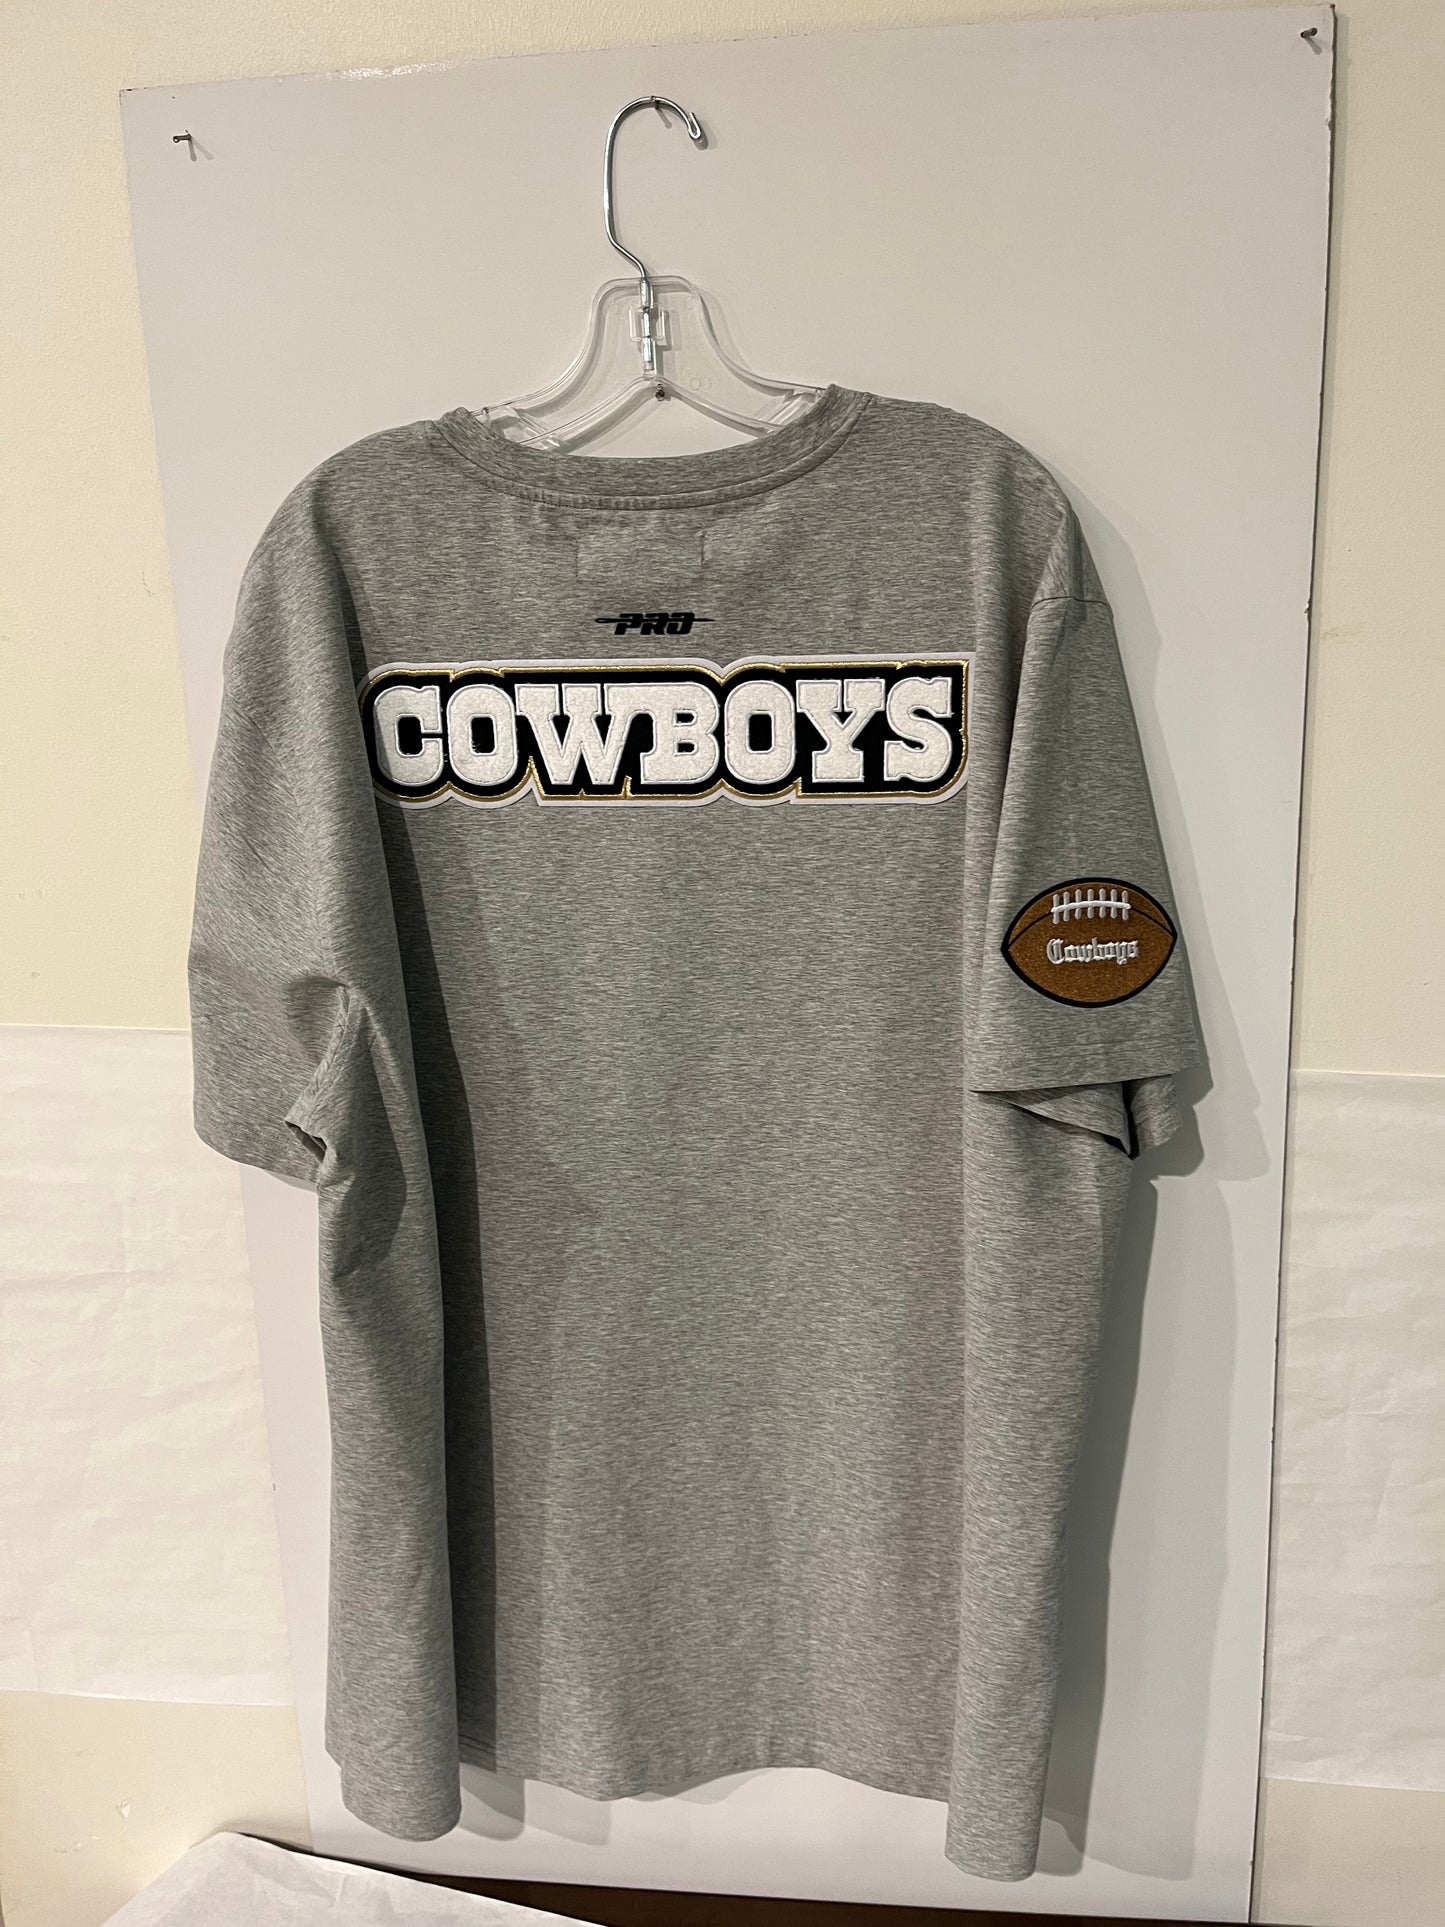 Dallas Cowboys Grey T-Shirt